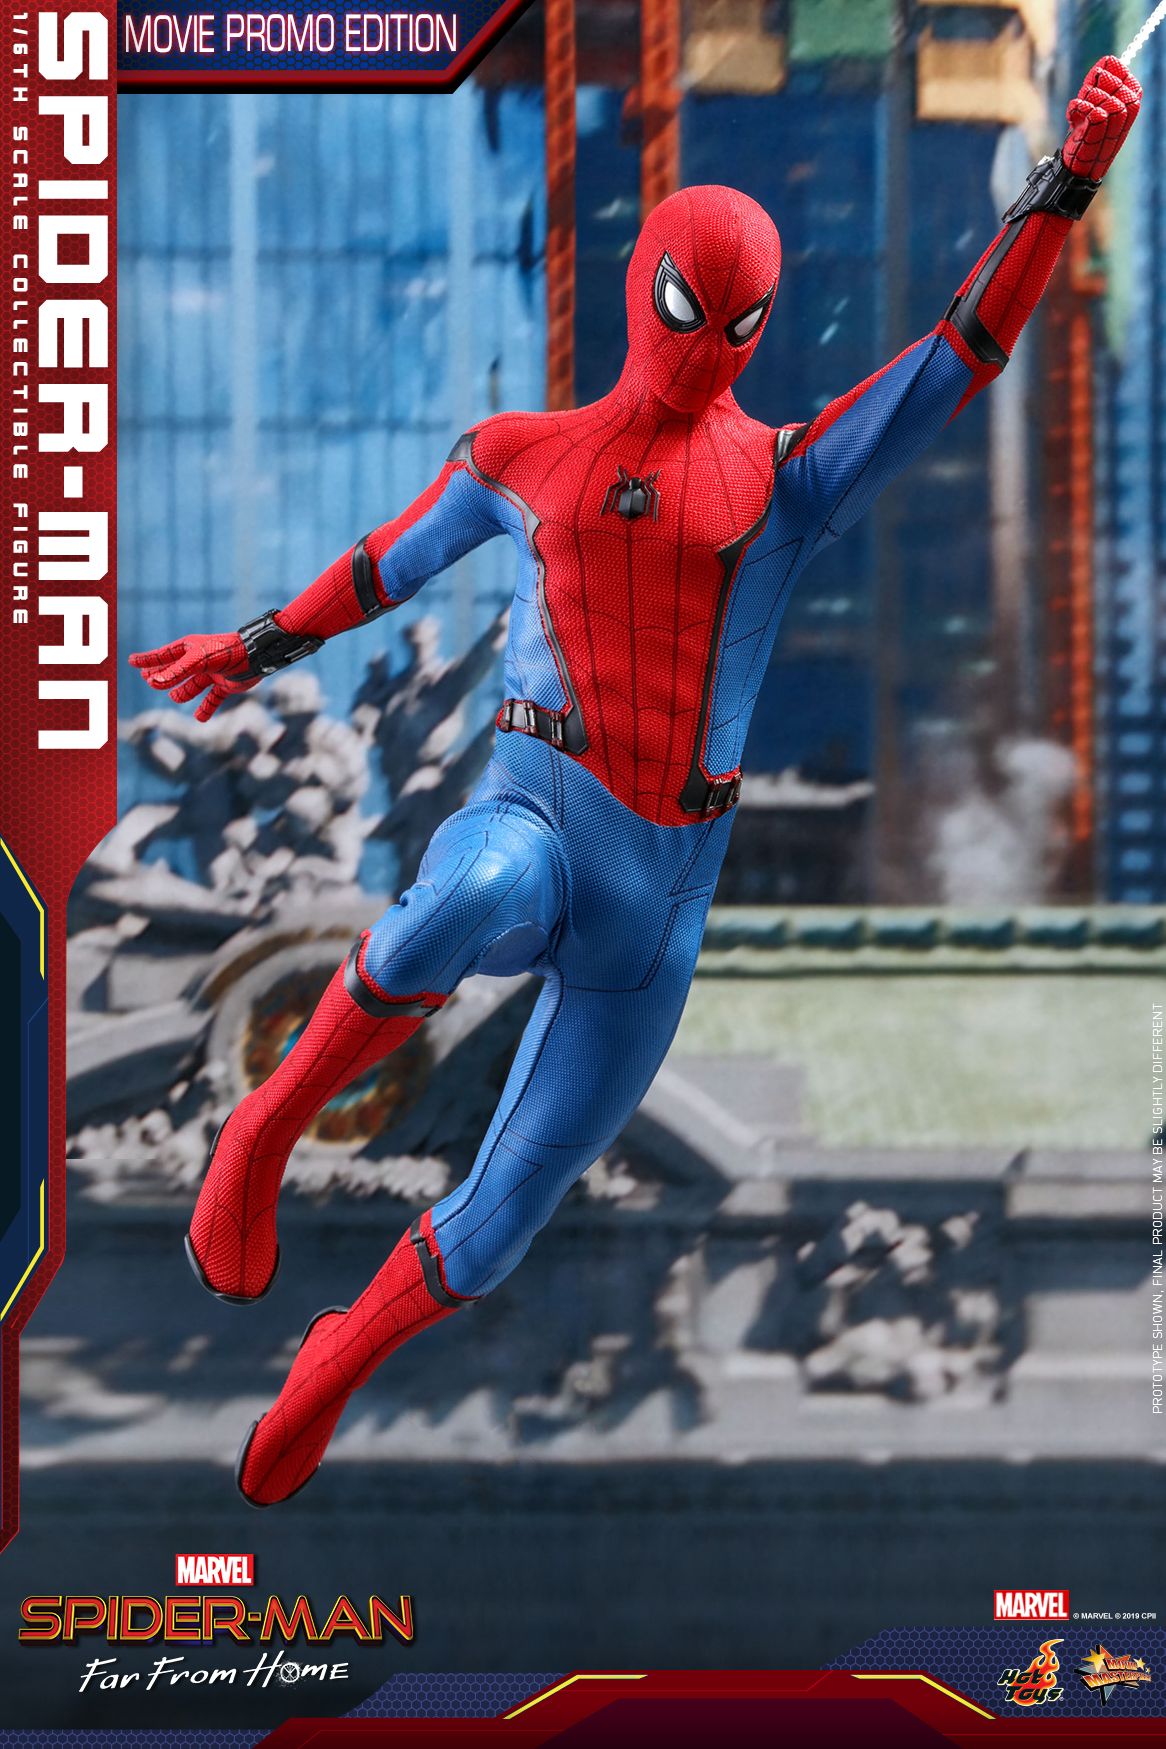 Hot Toys Smffh Spider Man Movie Promo Edition Collectible Figure_pr4